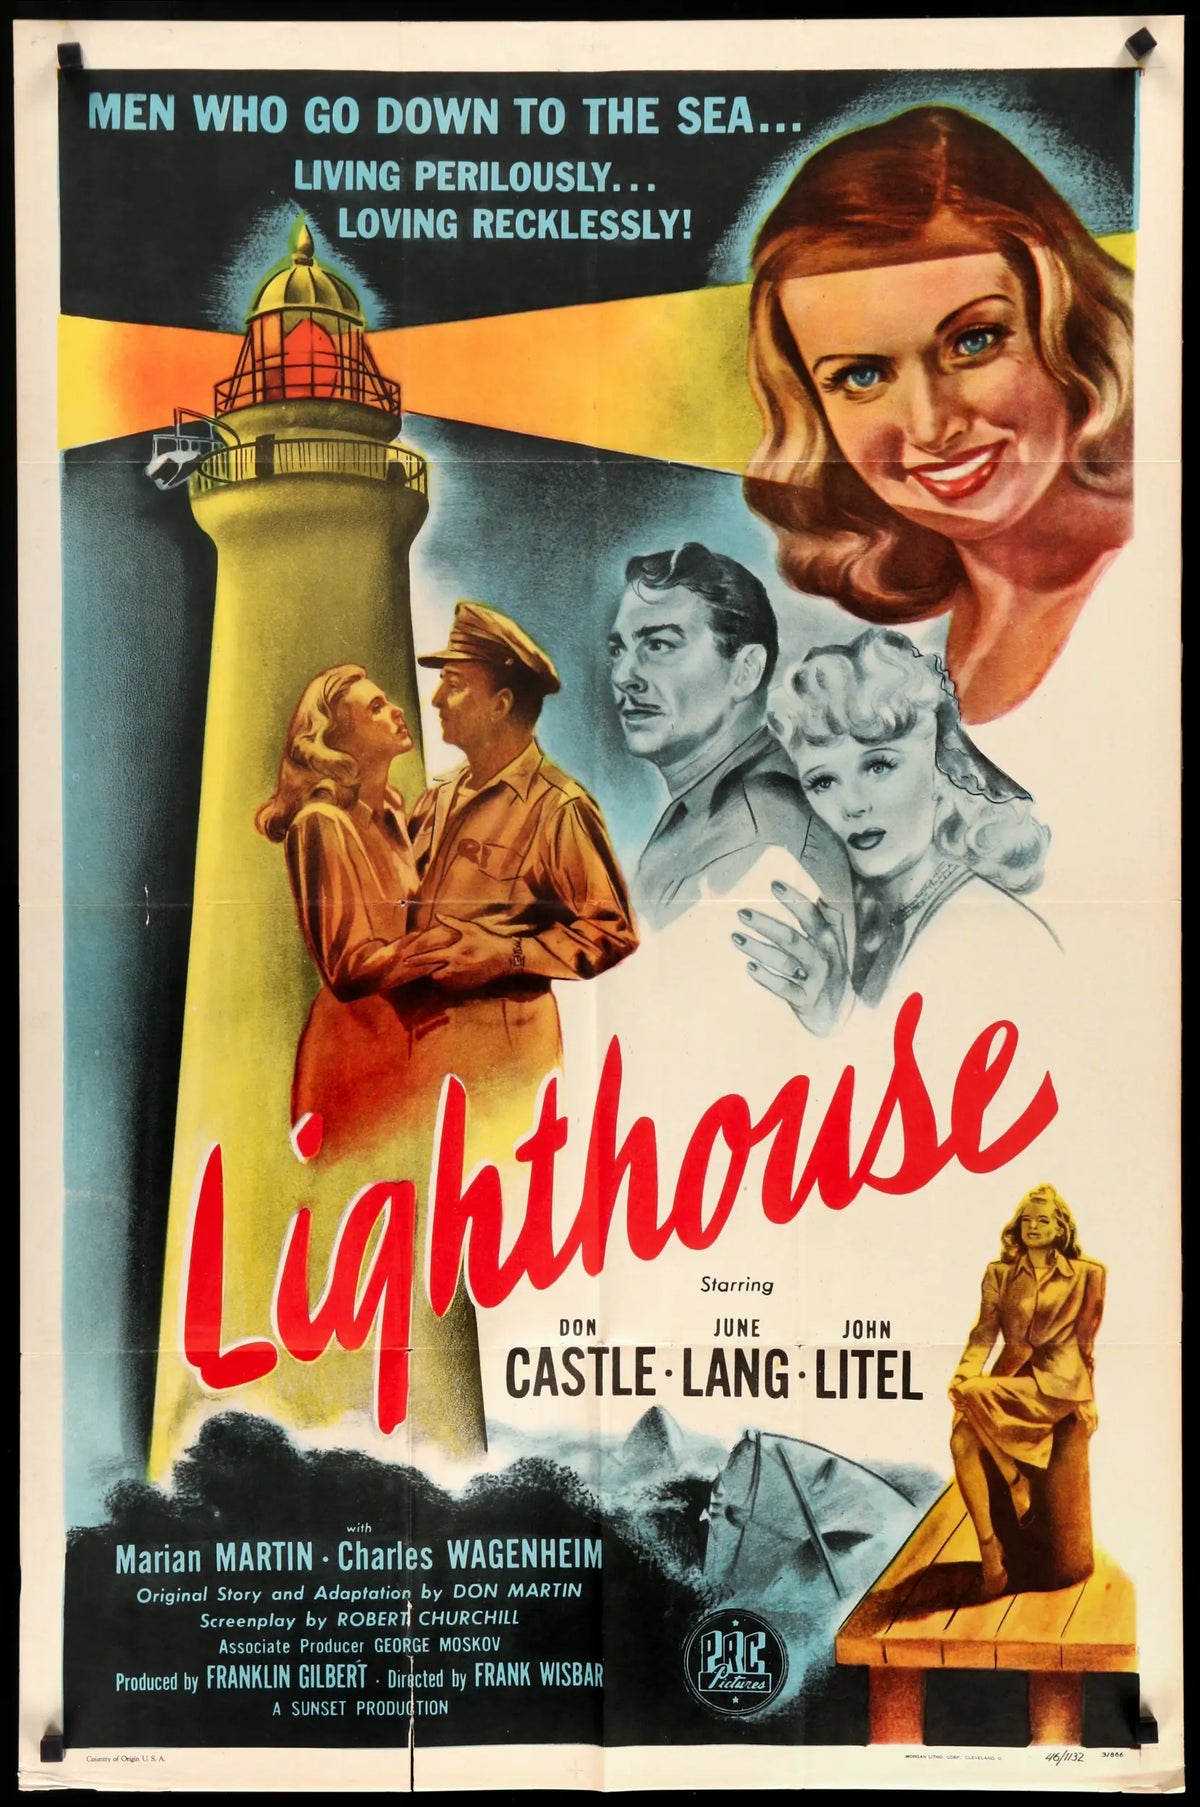 Lighthouse (1946) original movie poster for sale at Original Film Art